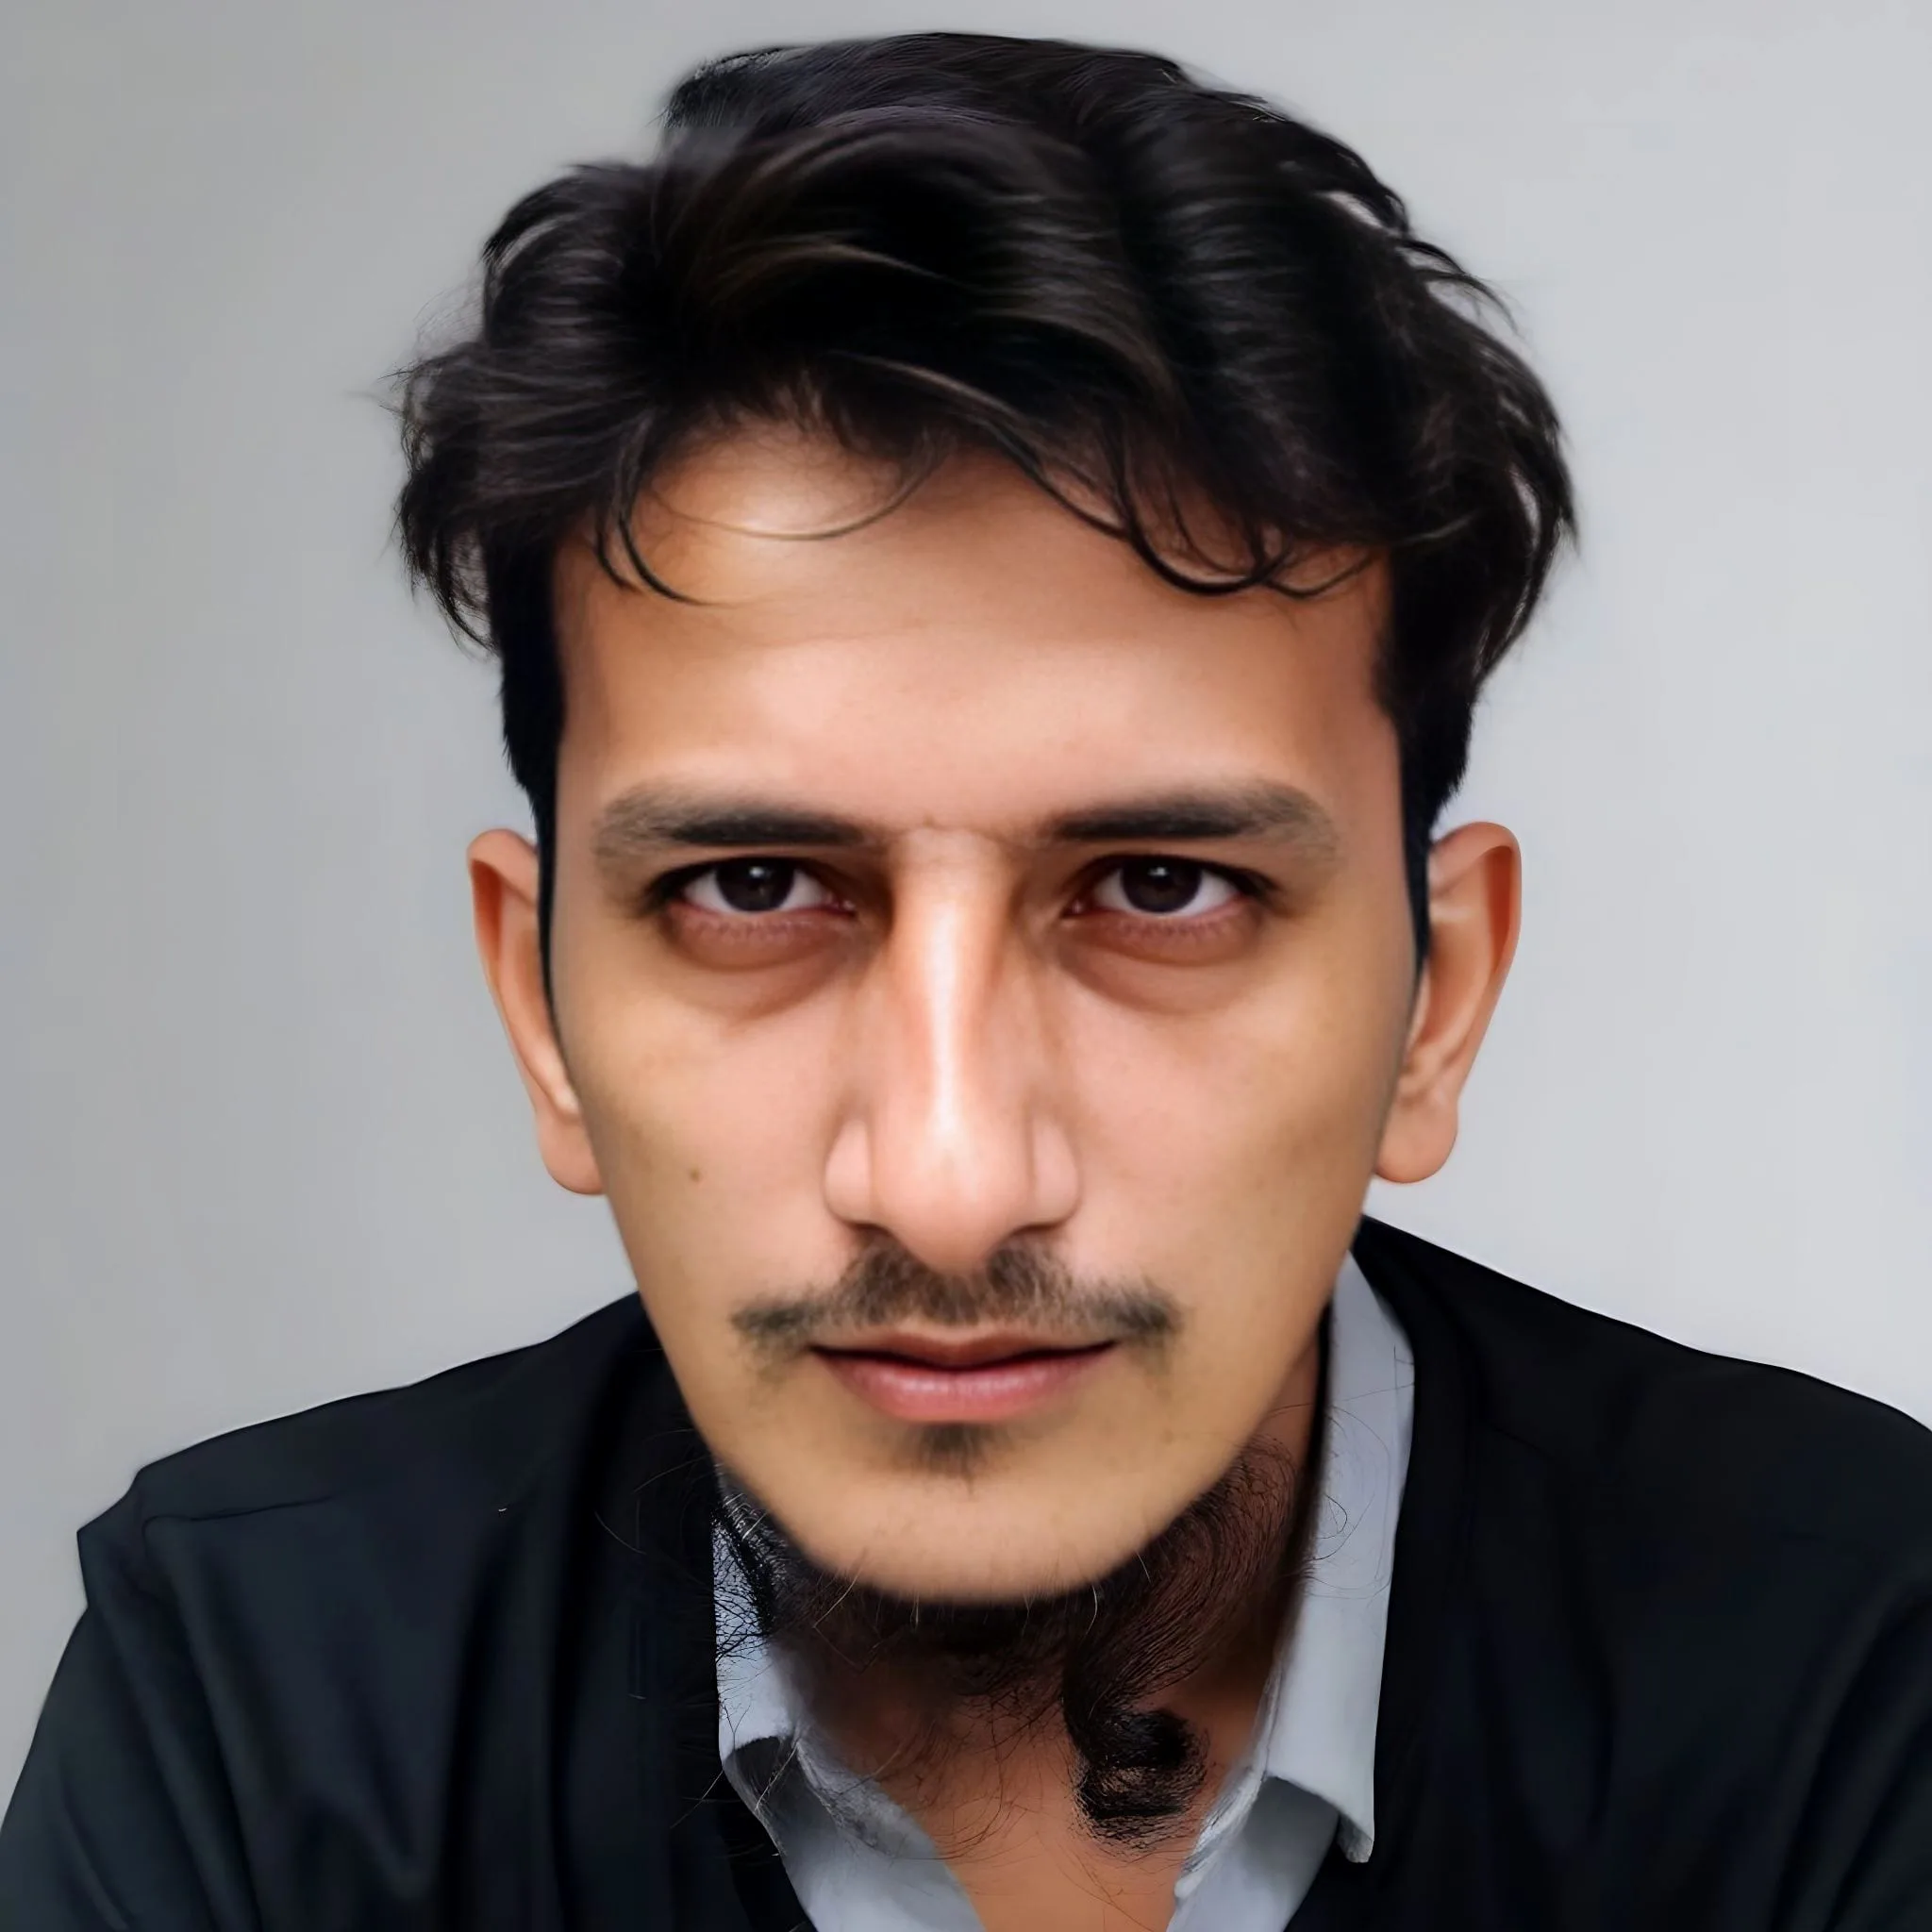 MD PIARUL ISLAM PIAS's avatar